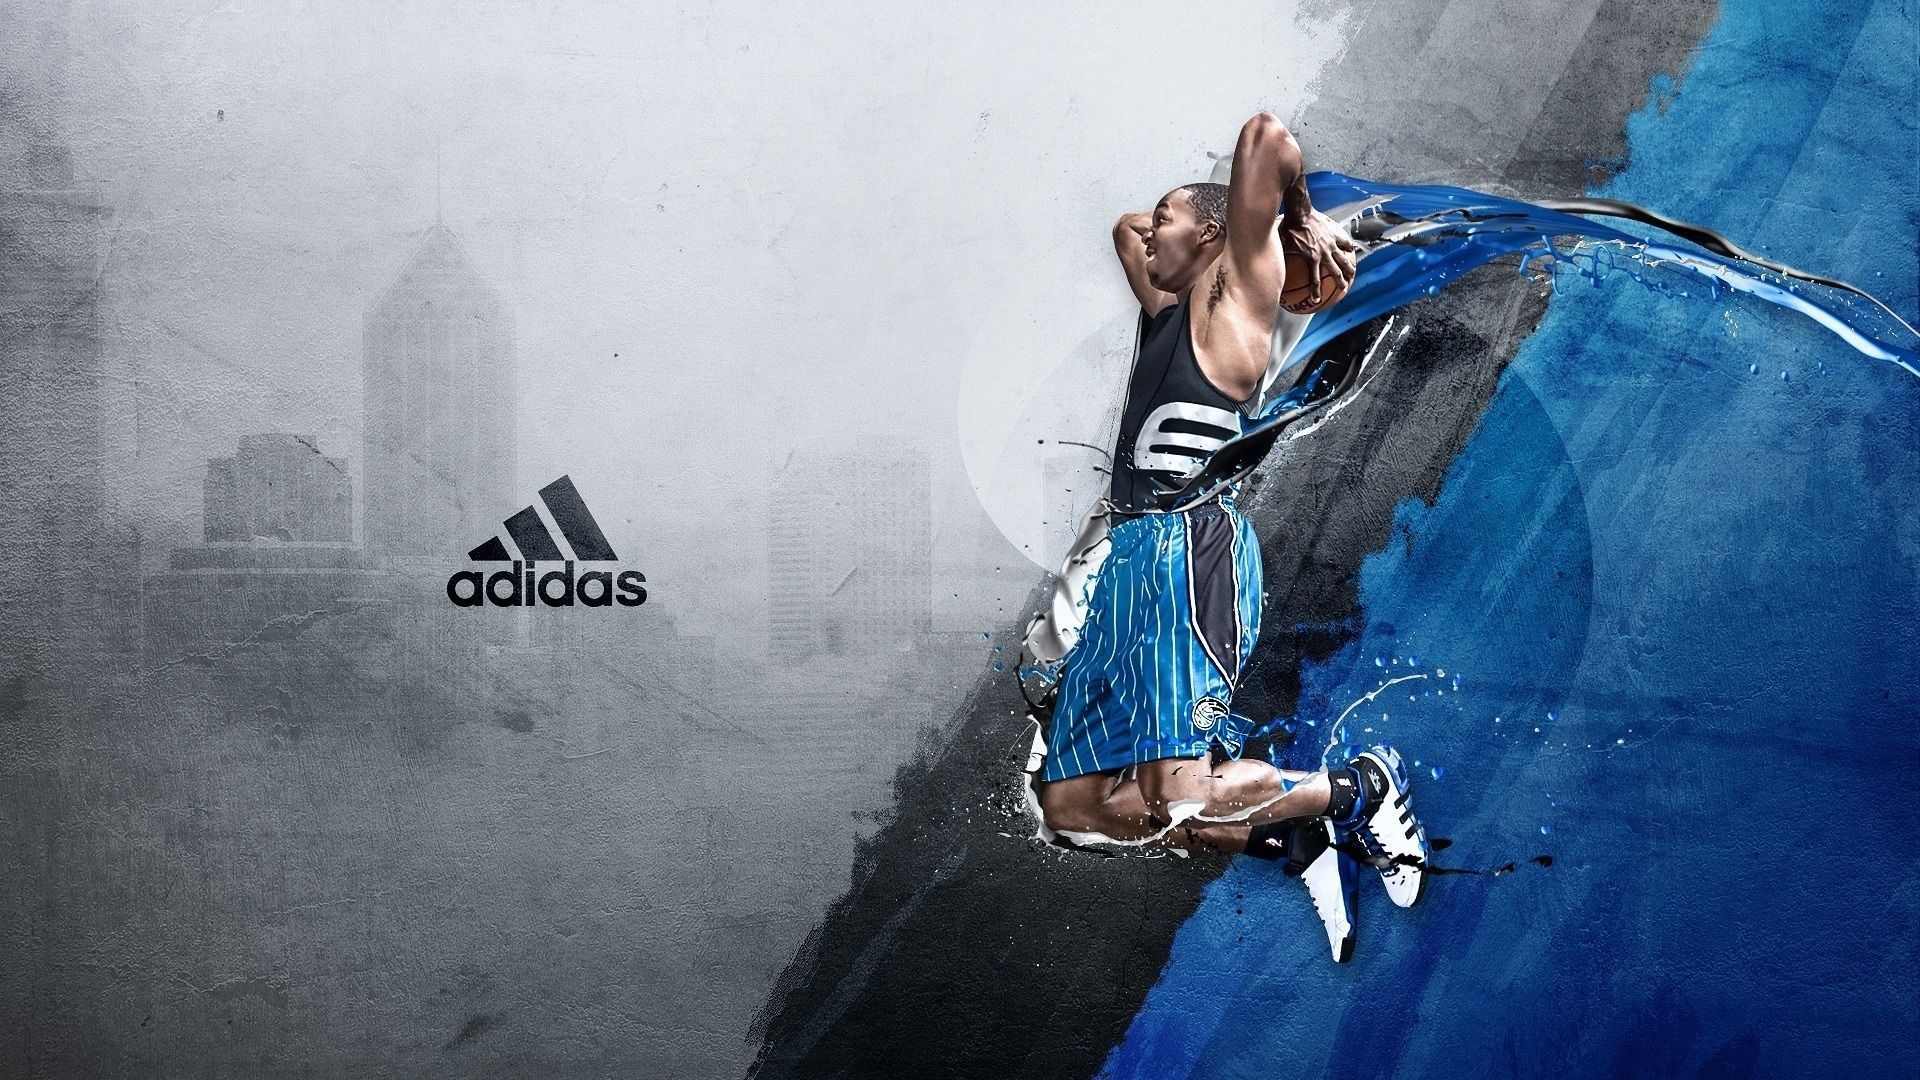 Adidas NBA Basketball Wallpapers | HD Wallpapers